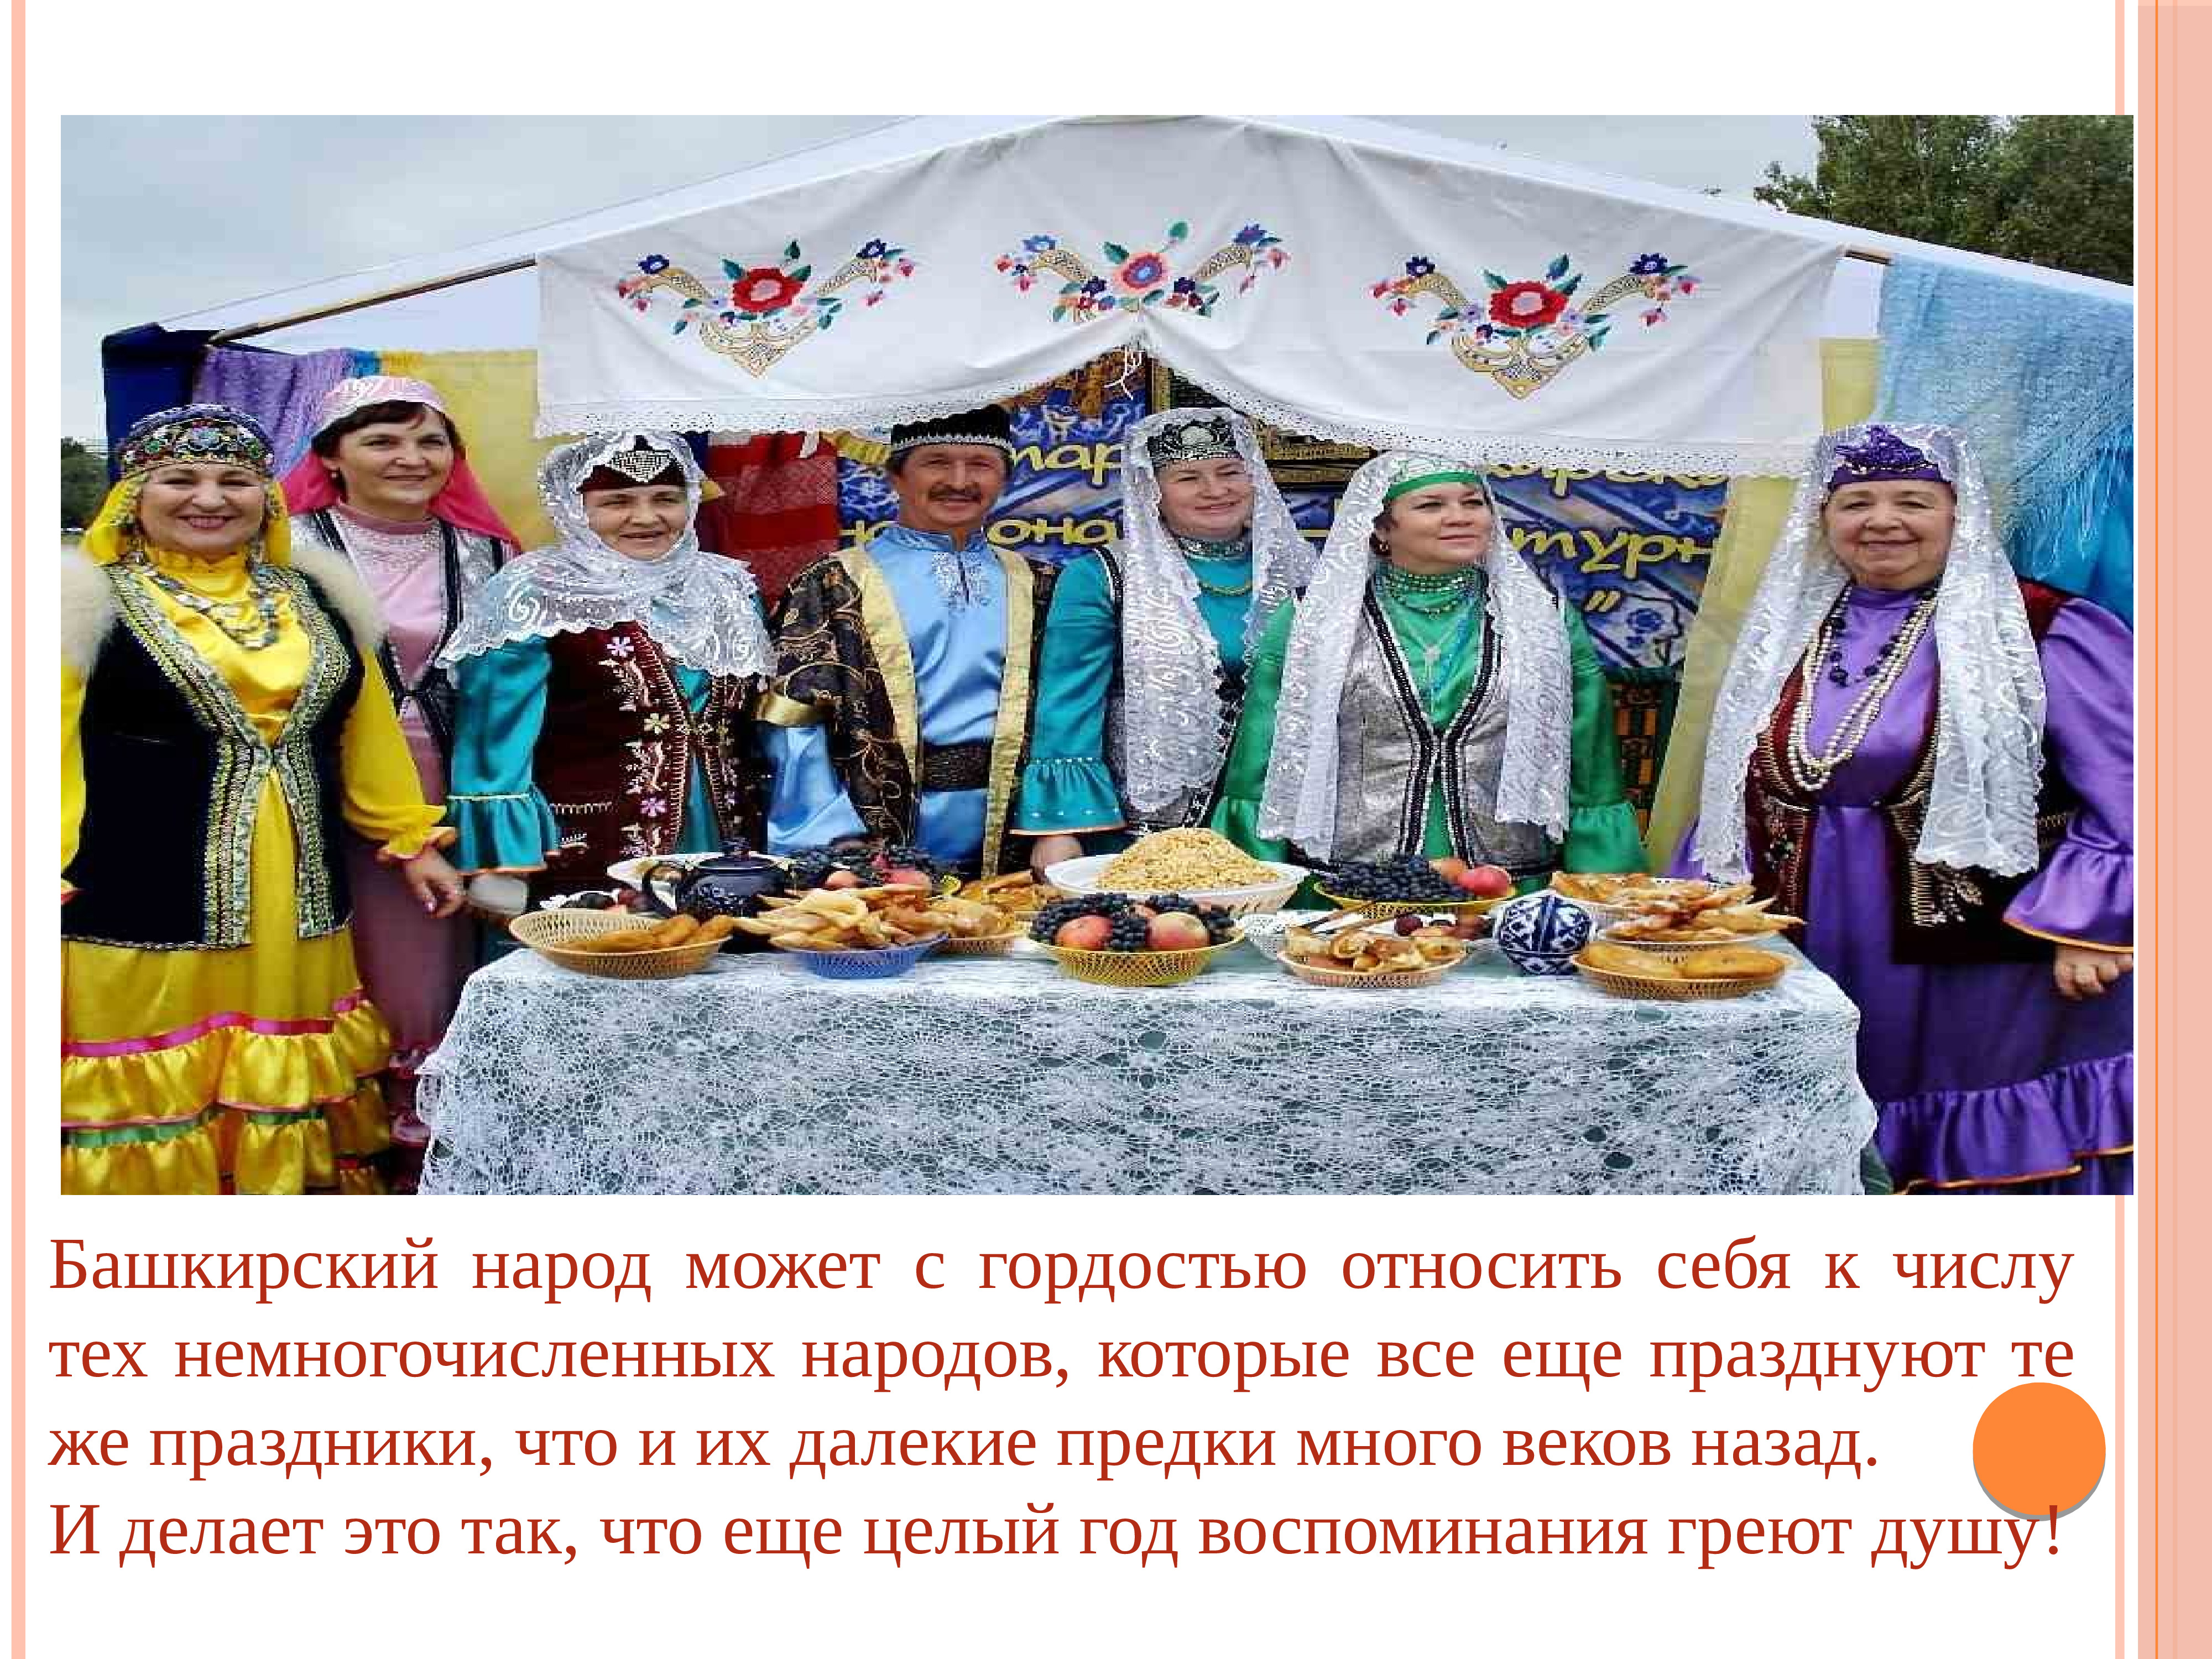 Традиции и обычаи народа Башкирии